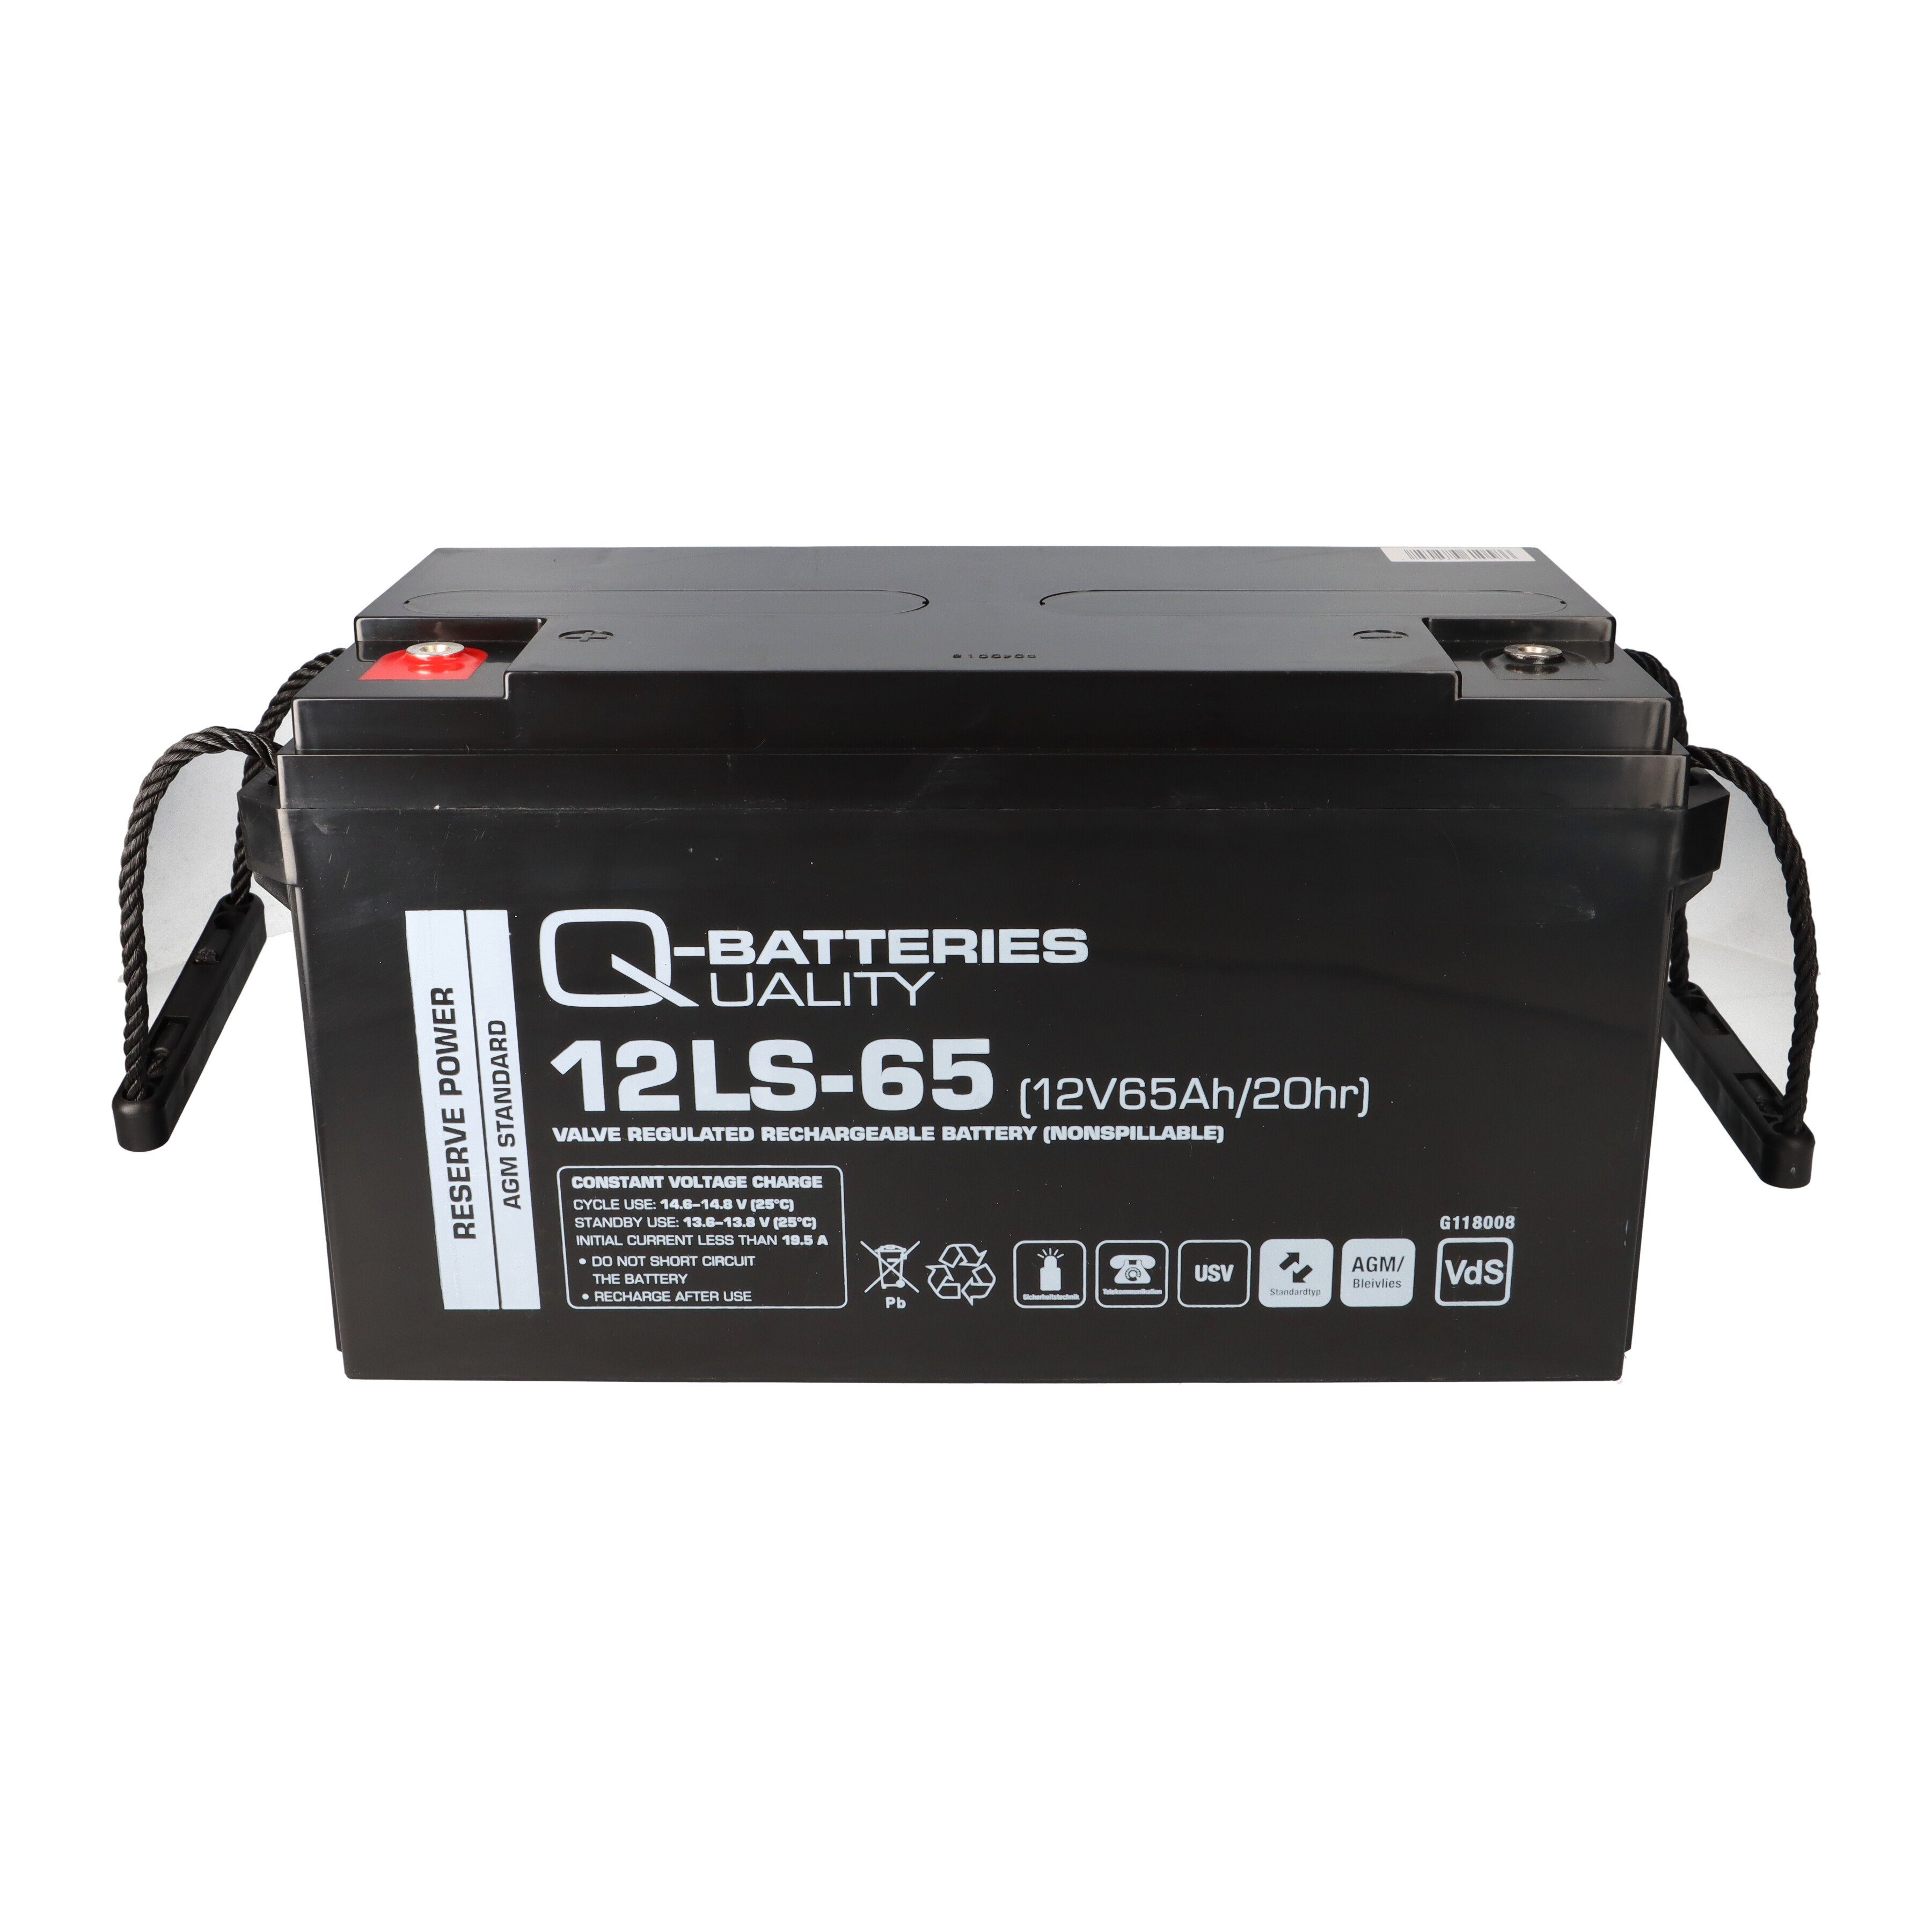 VRLA 12LS-65 / Blei-Vlies-Akku Bleiakkus Q-Batteries AGM 12V Q-Batteries VdS mit 65Ah